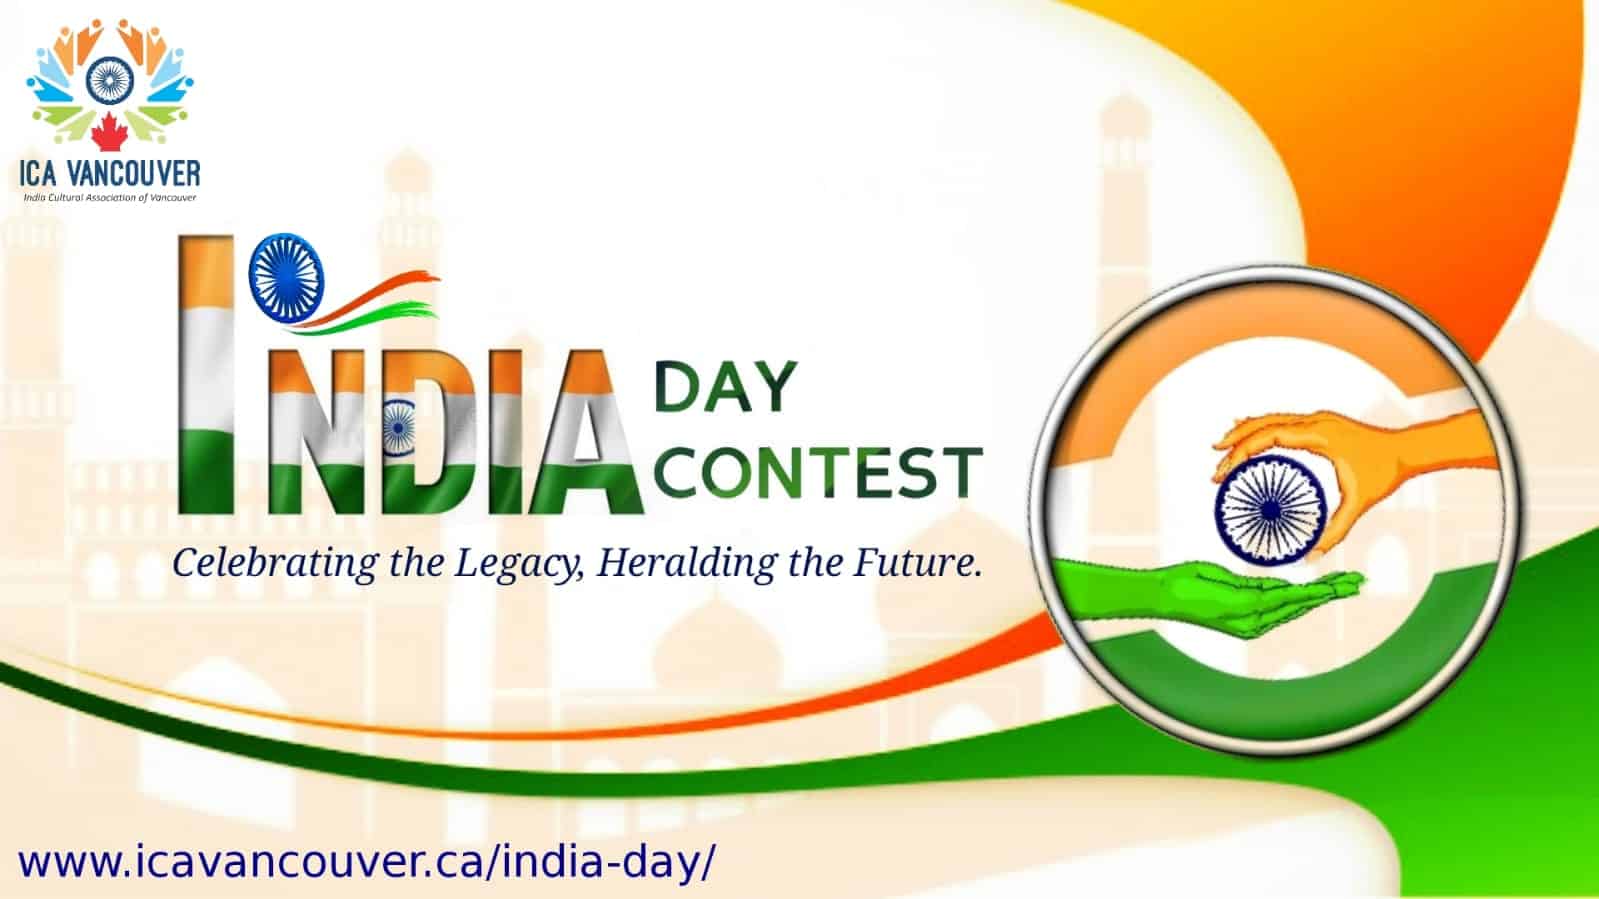 India Day Contest 2020